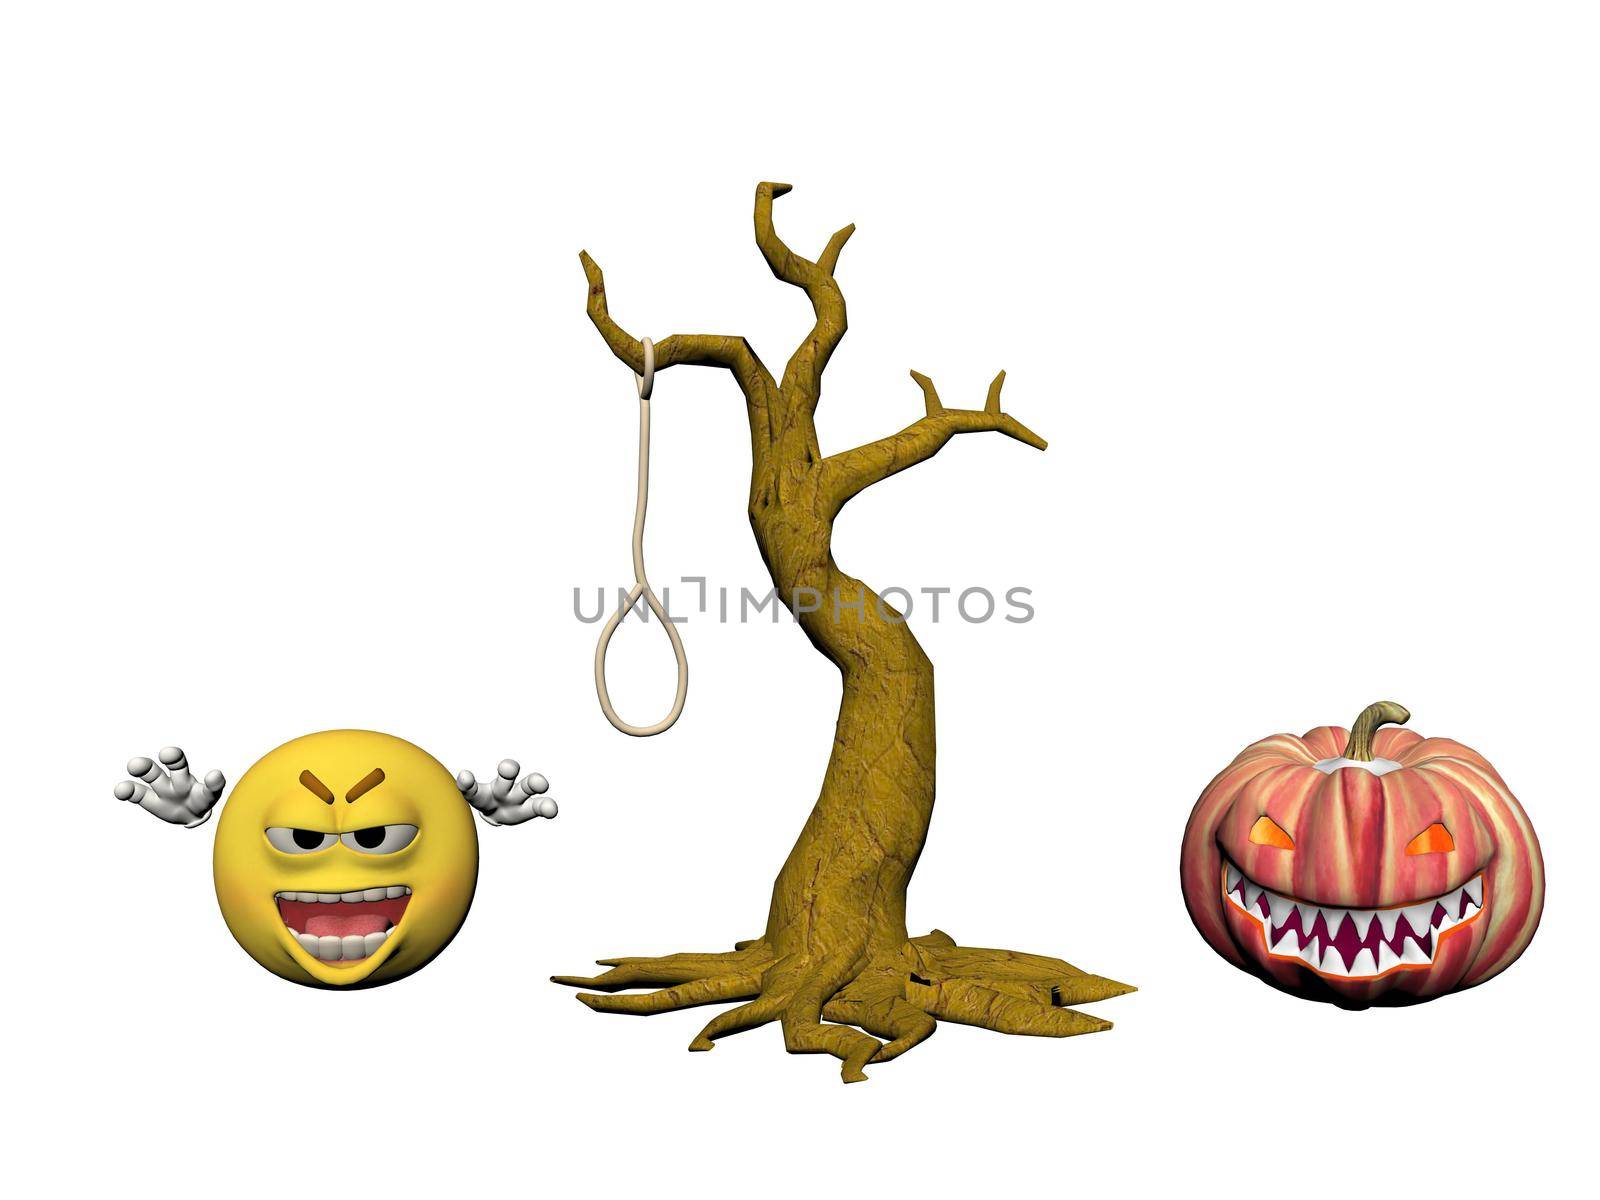 Happy Halloween Smiling Emoticon - 3d rendering by mariephotos